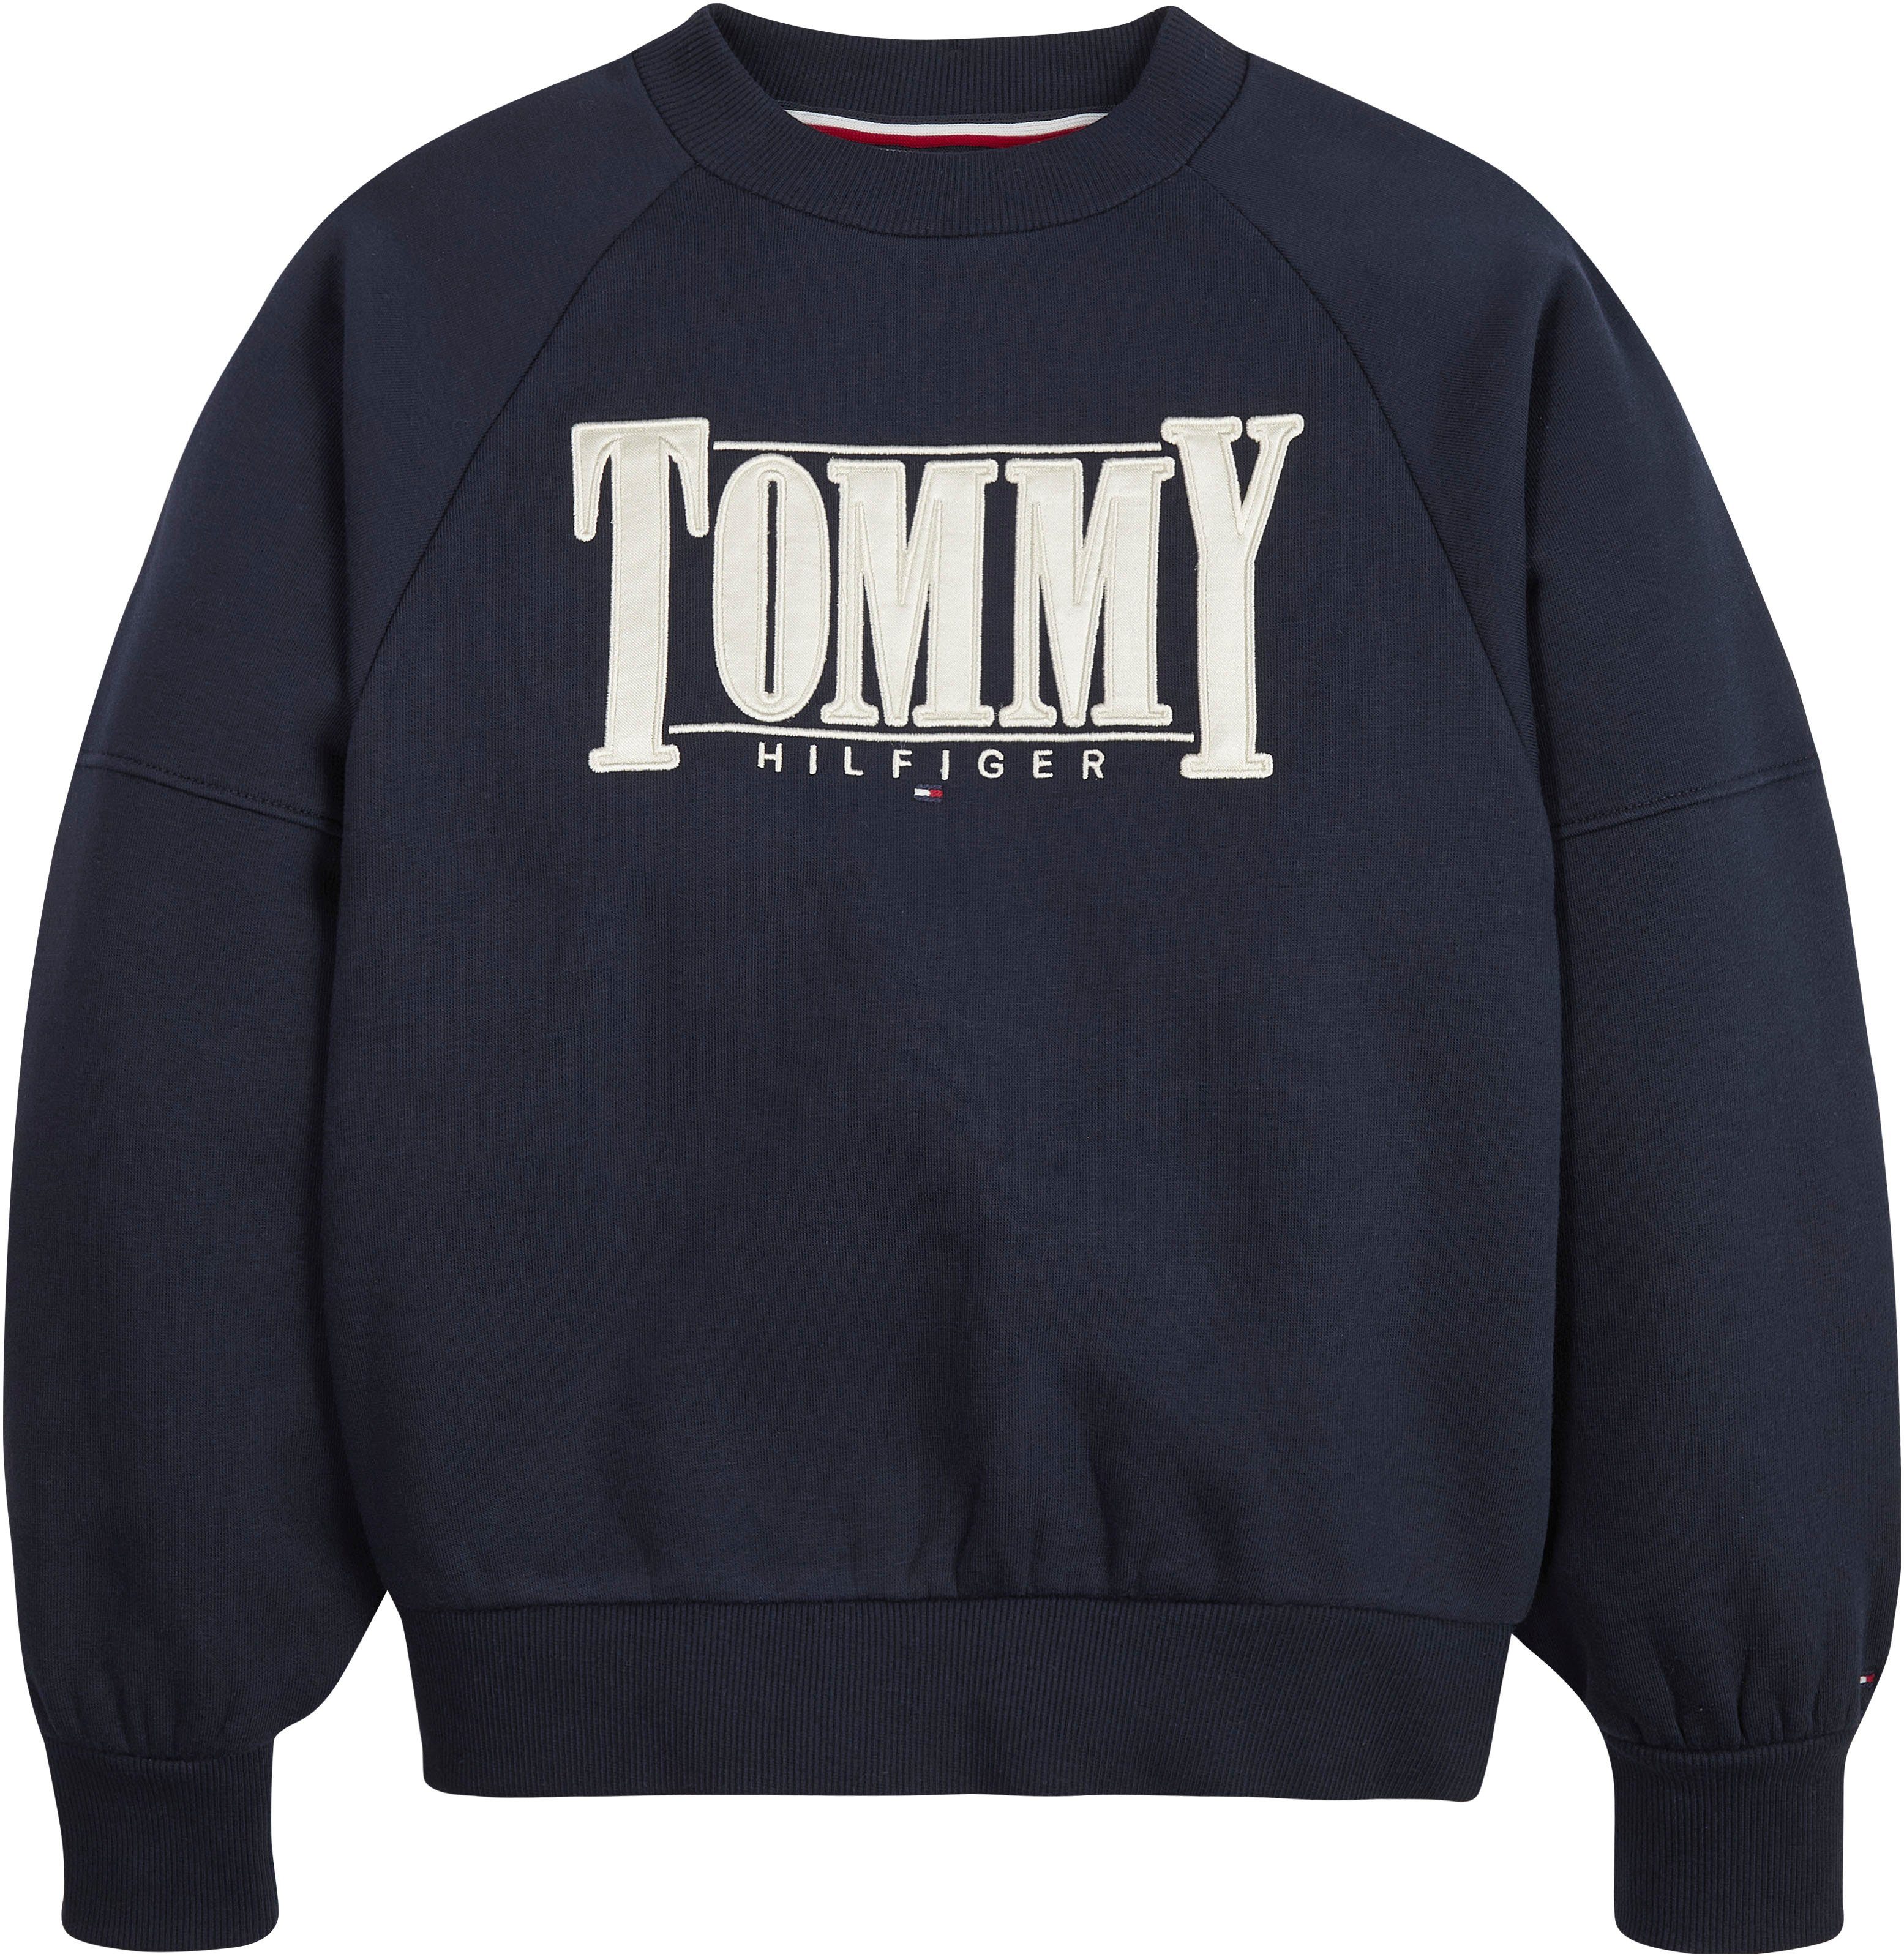 Beliebt ausverkauft Tommy Hilfiger Sweatshirt 146 TOMMY SATEEN LOGO desert